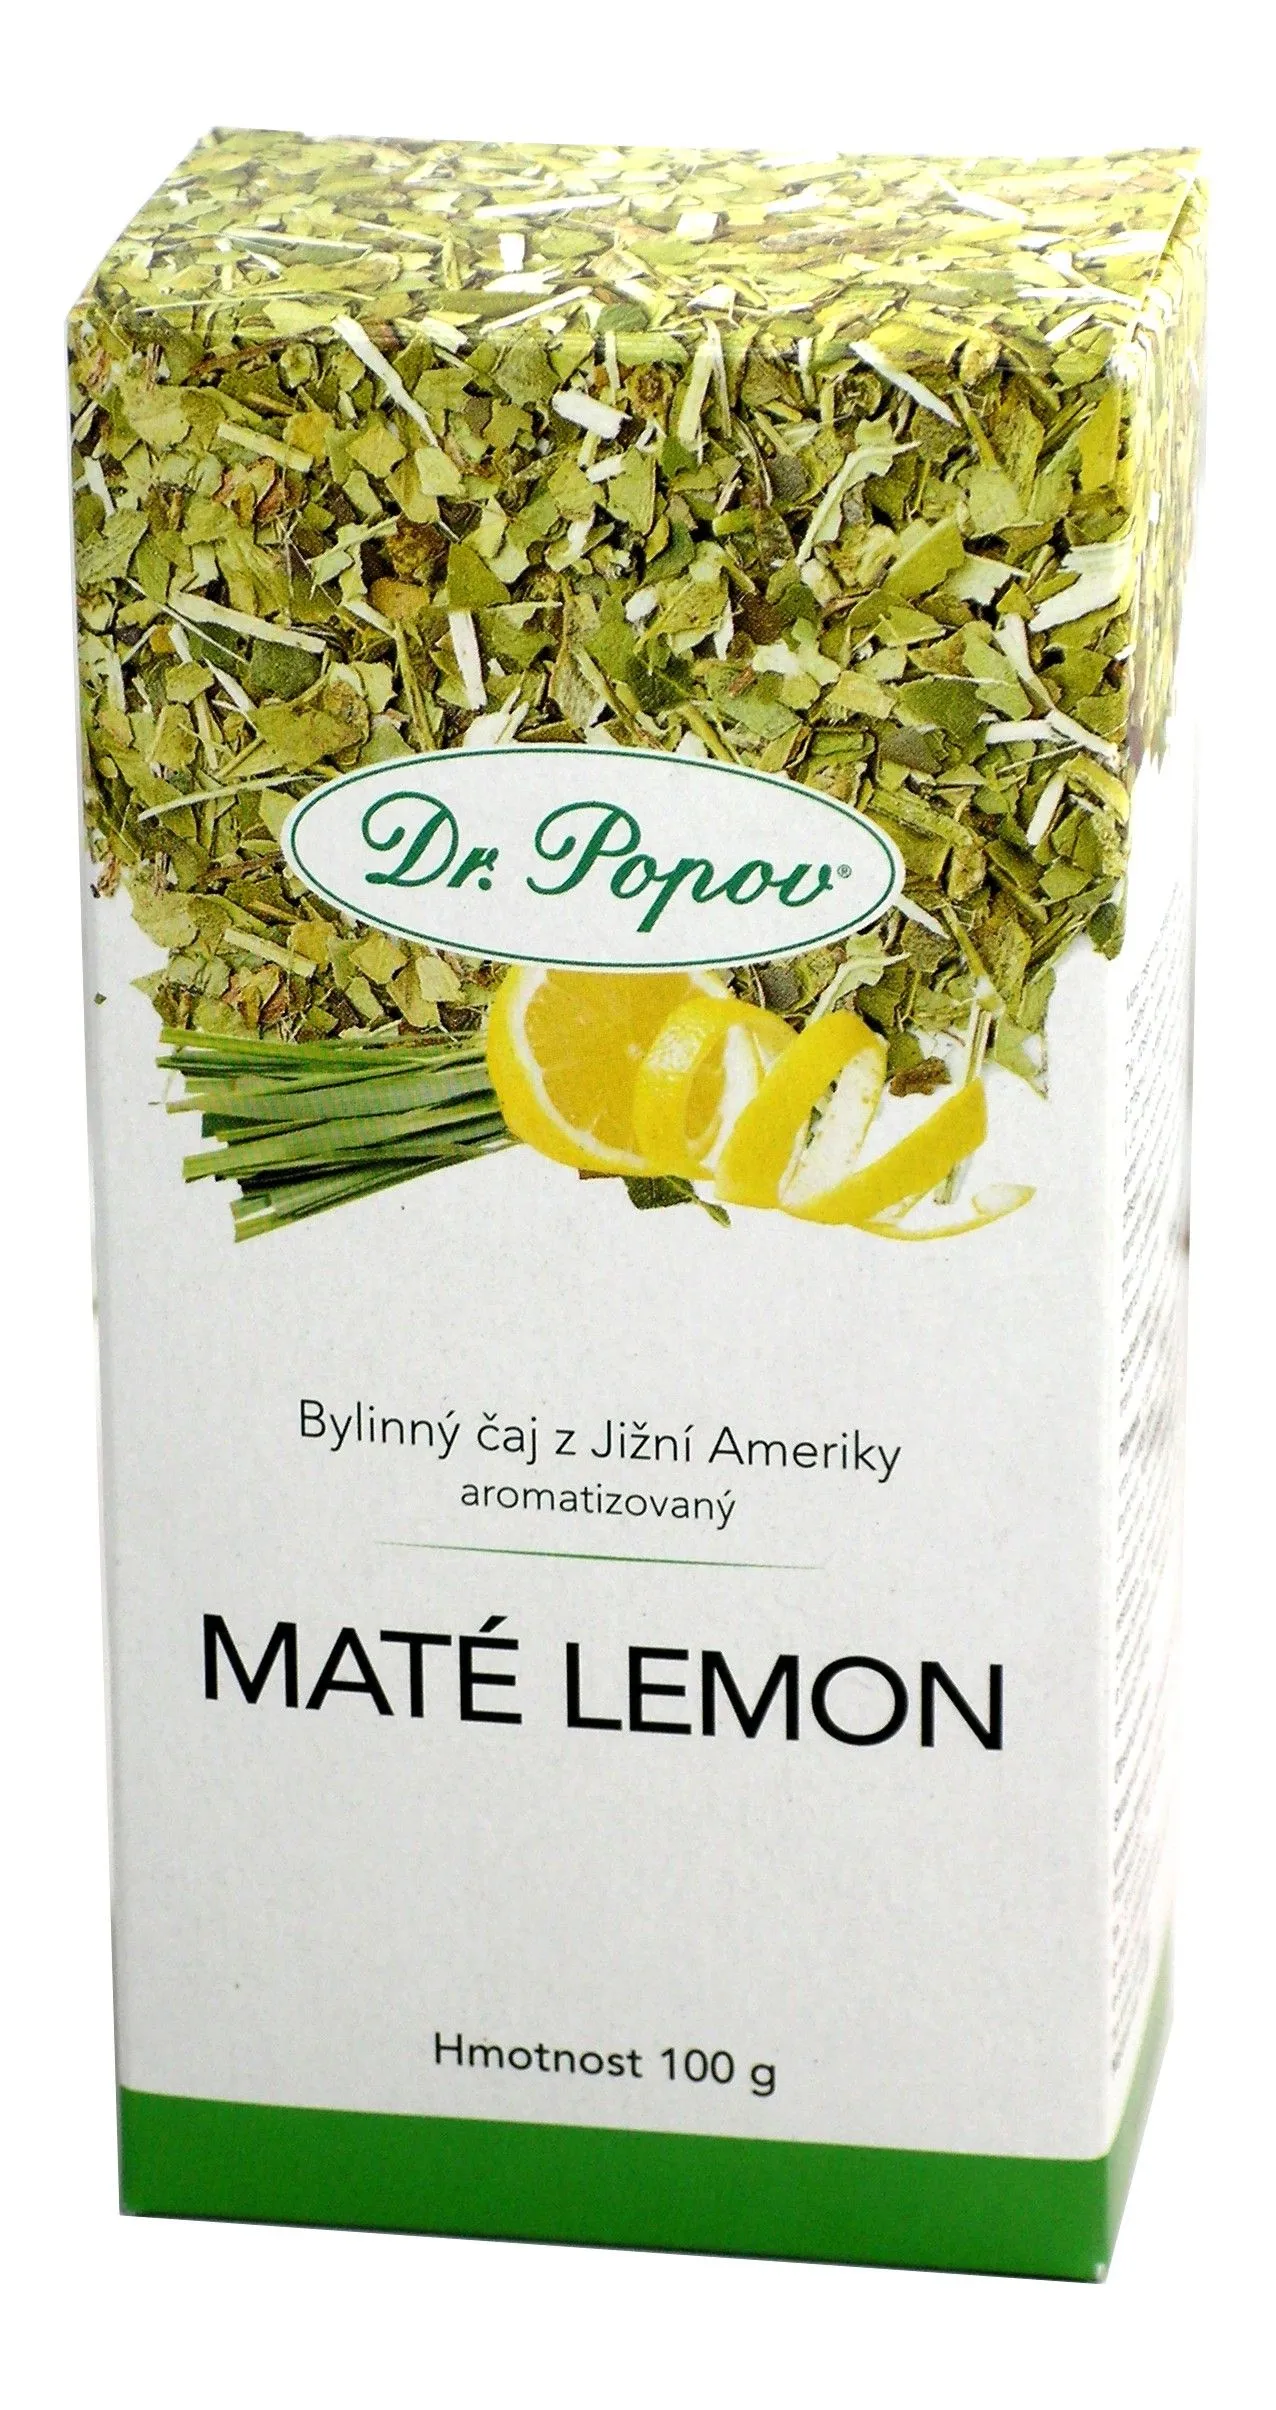 Dr. Popov Maté Lemon